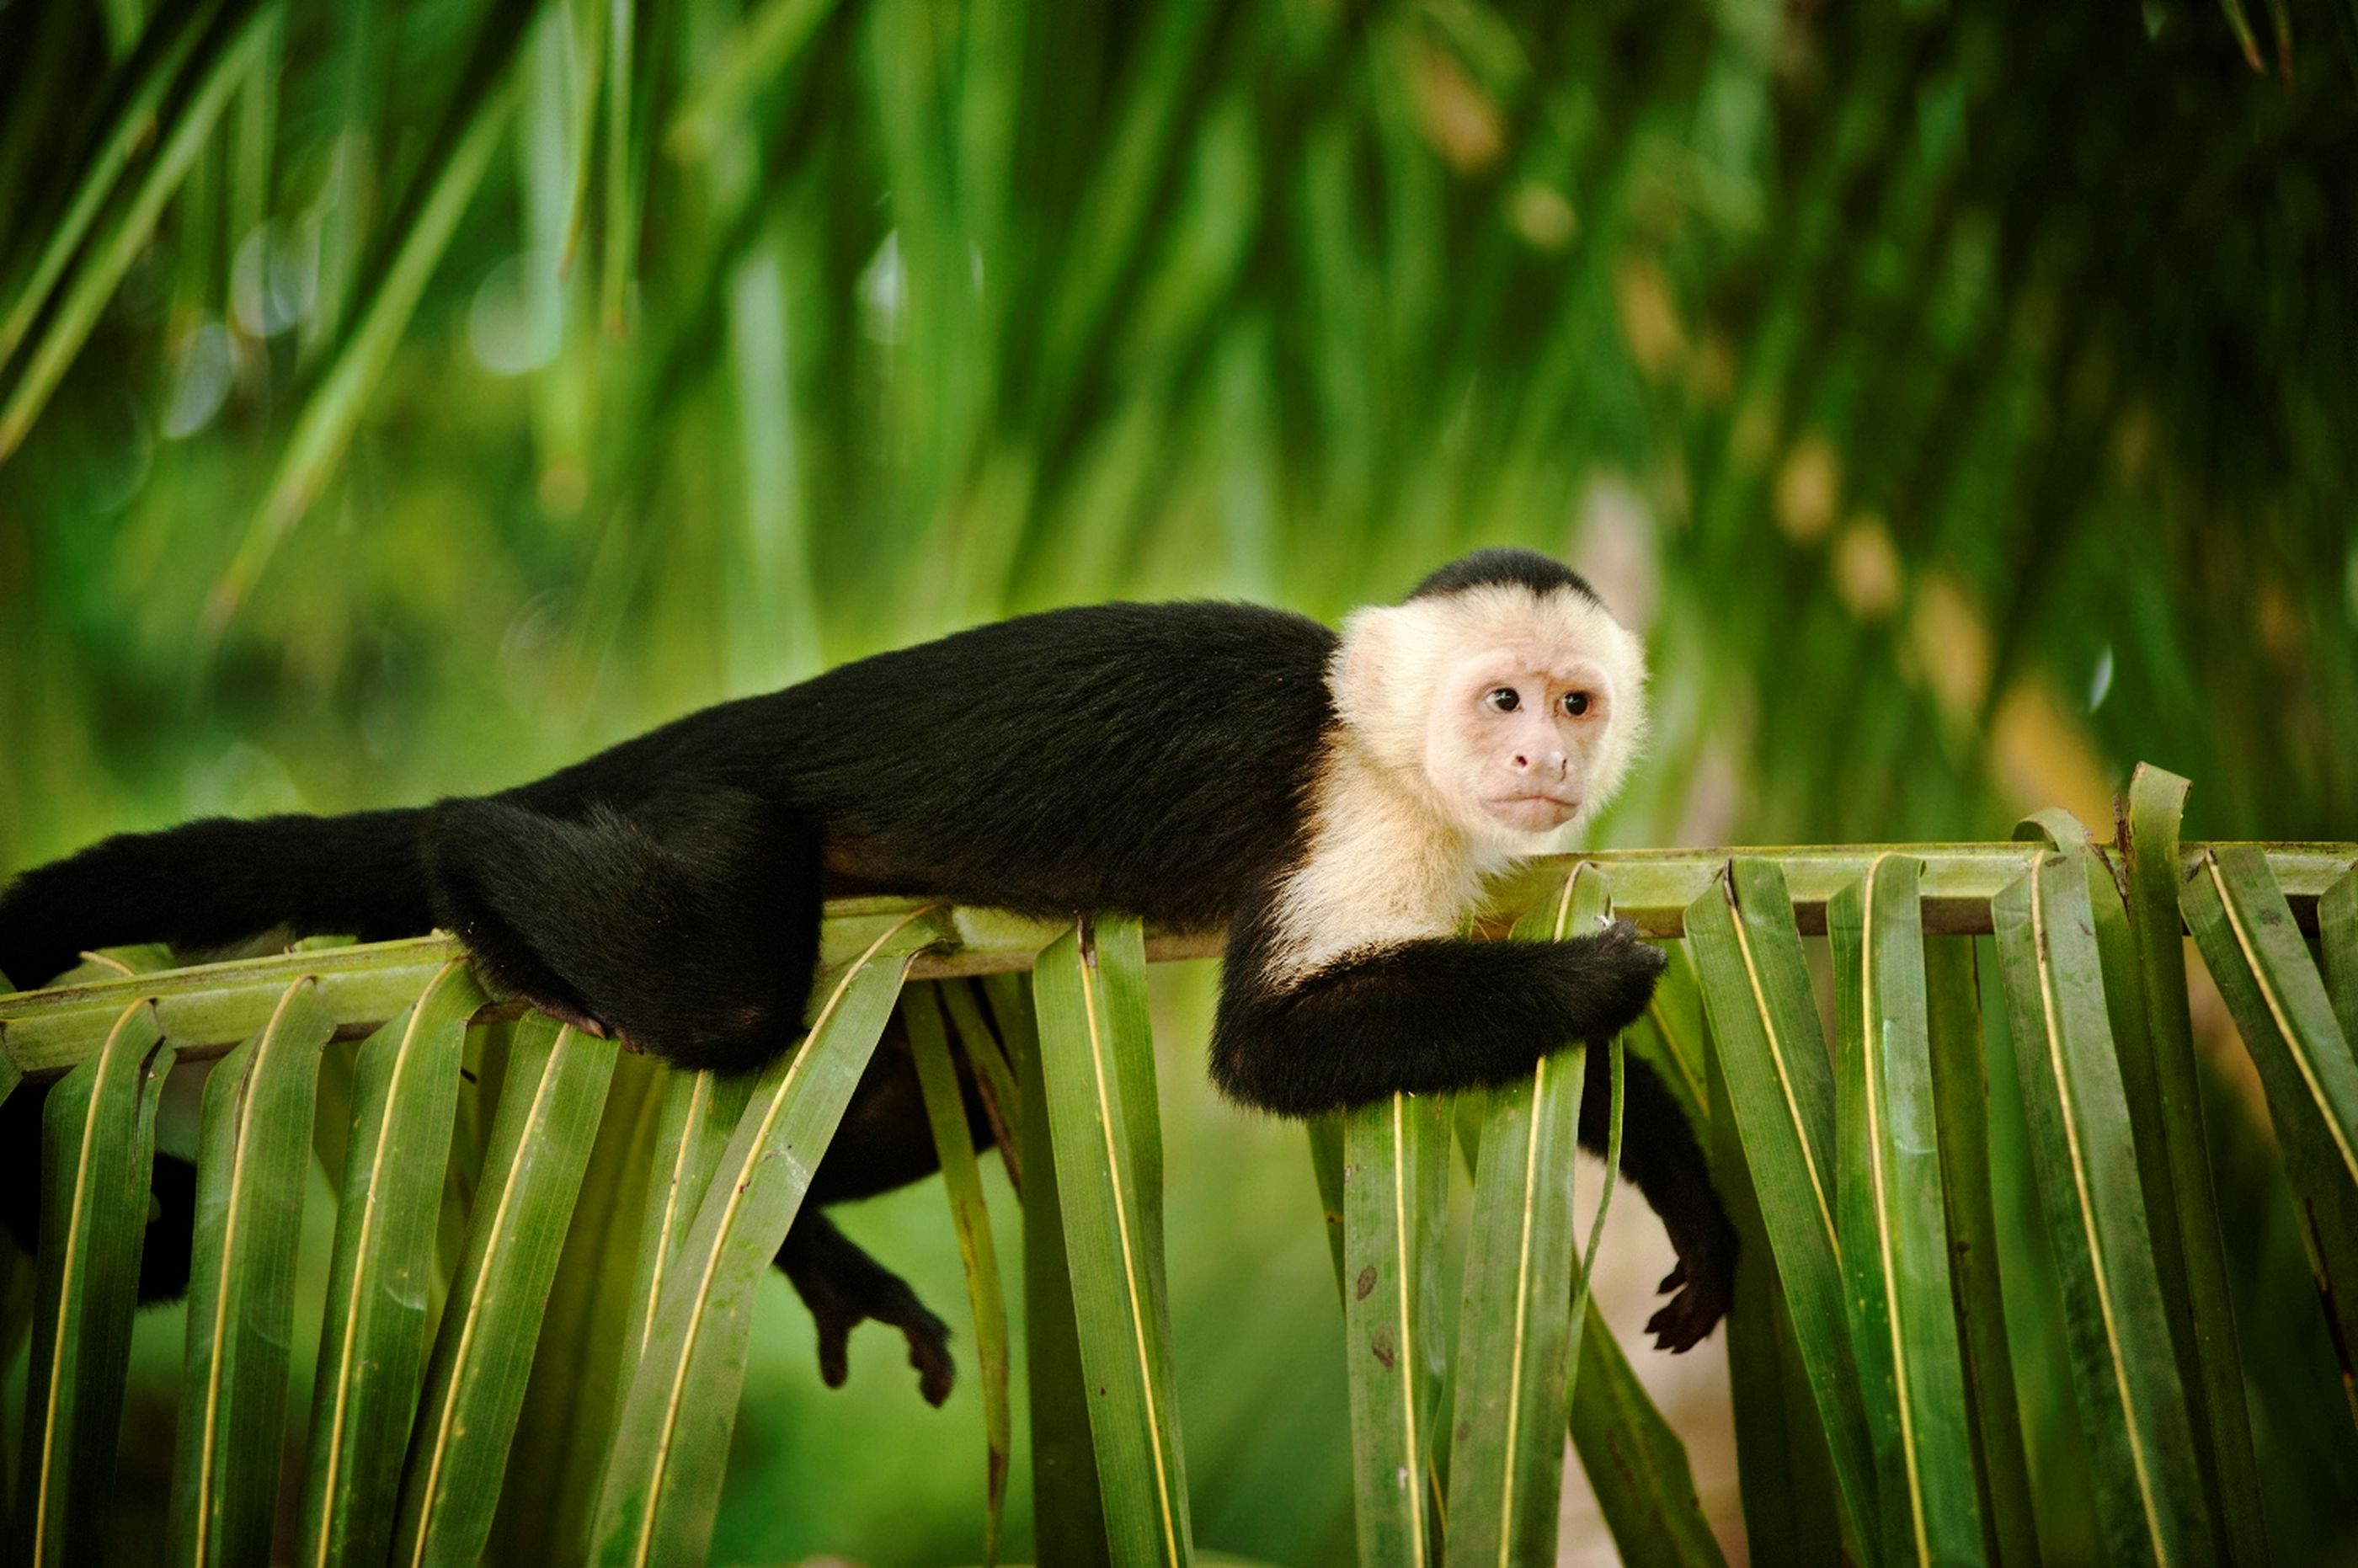 White Capuchin, Costa Rica